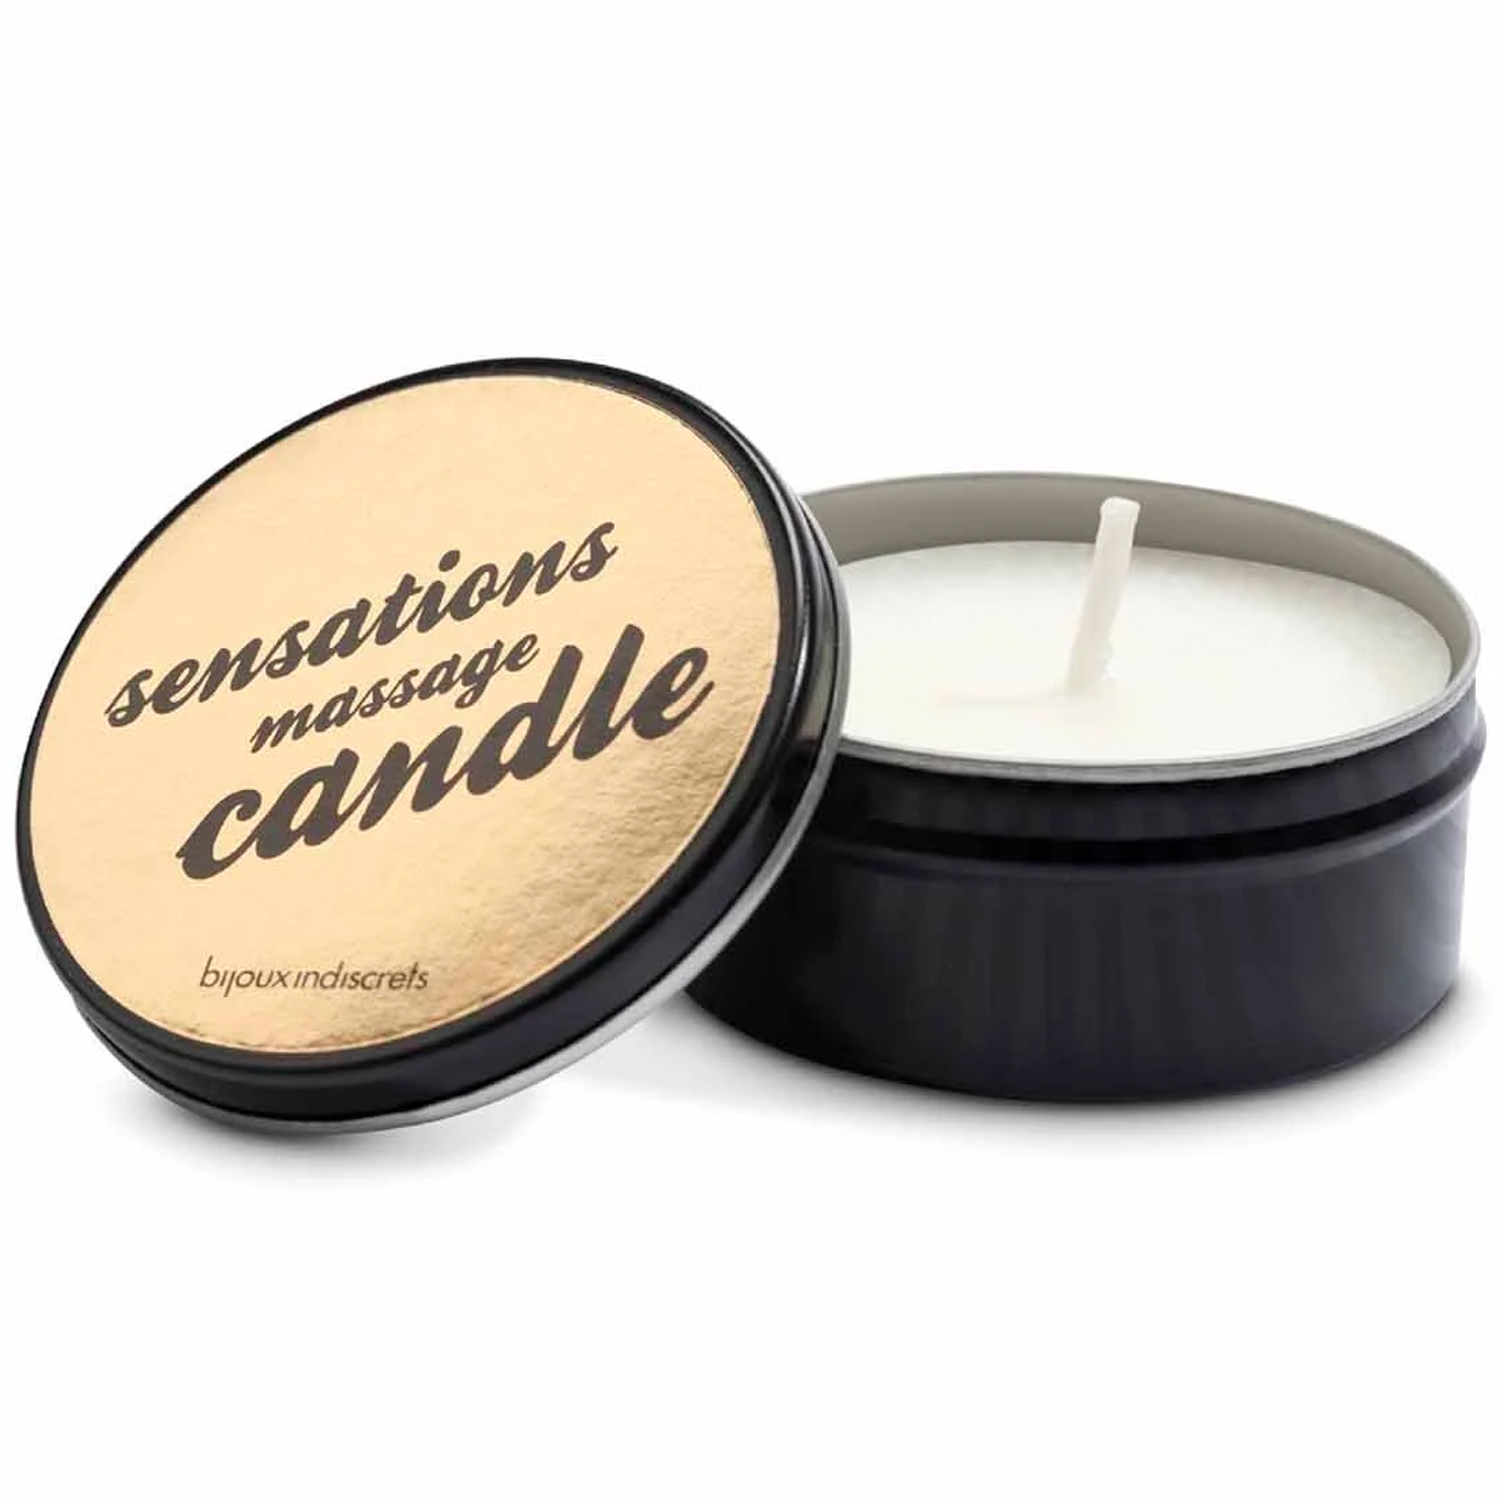 8: Bijoux Indiscrets Bonbons Sensations Massage Candle Massagelys     - Hvid